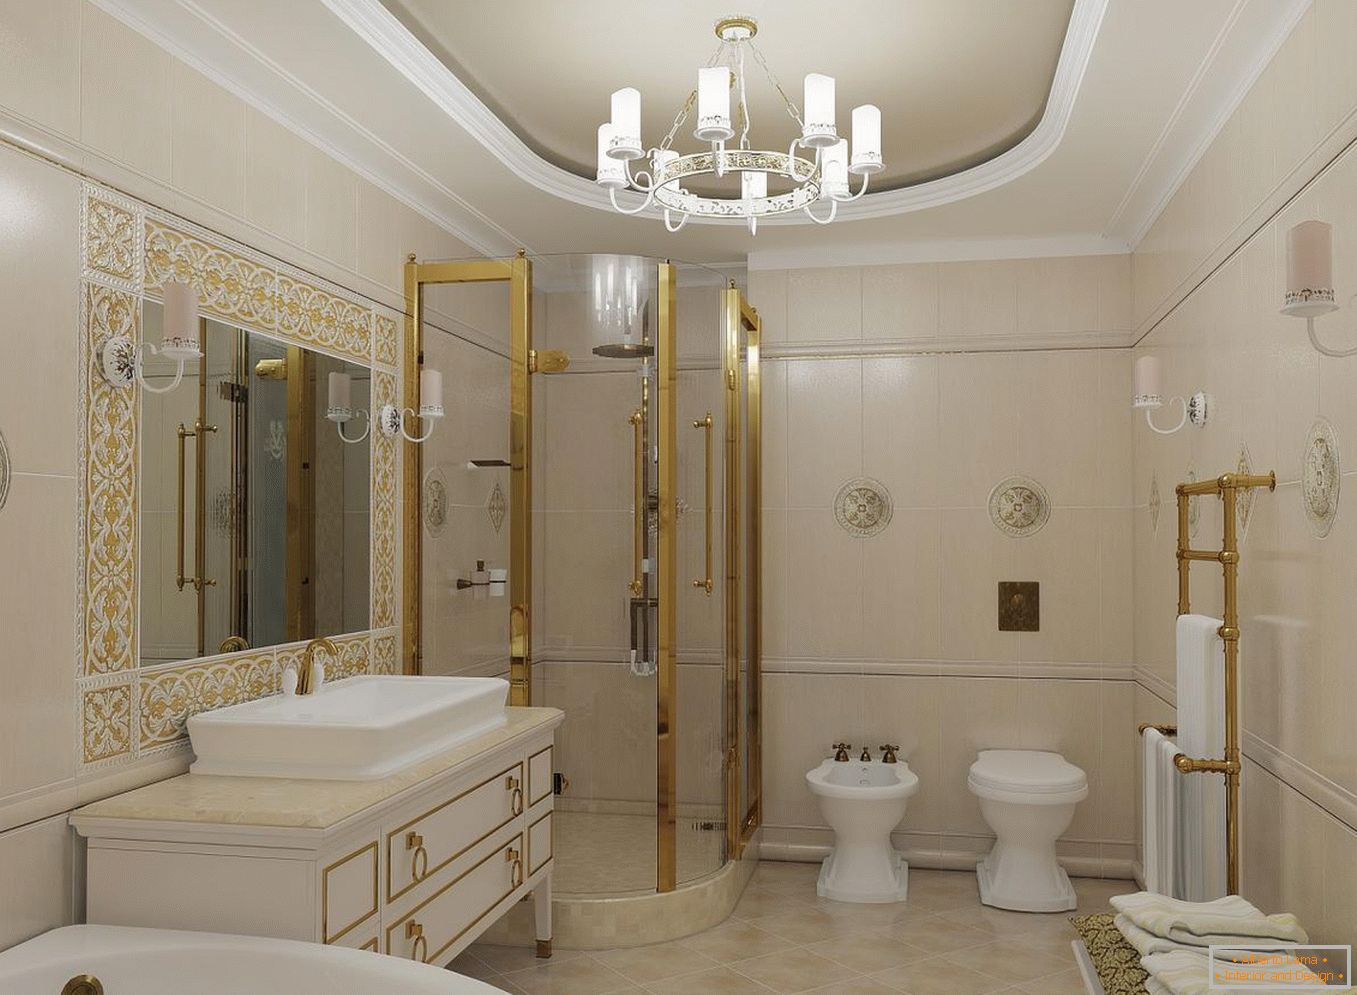 Cabine de douche в ванной в классическом стиле